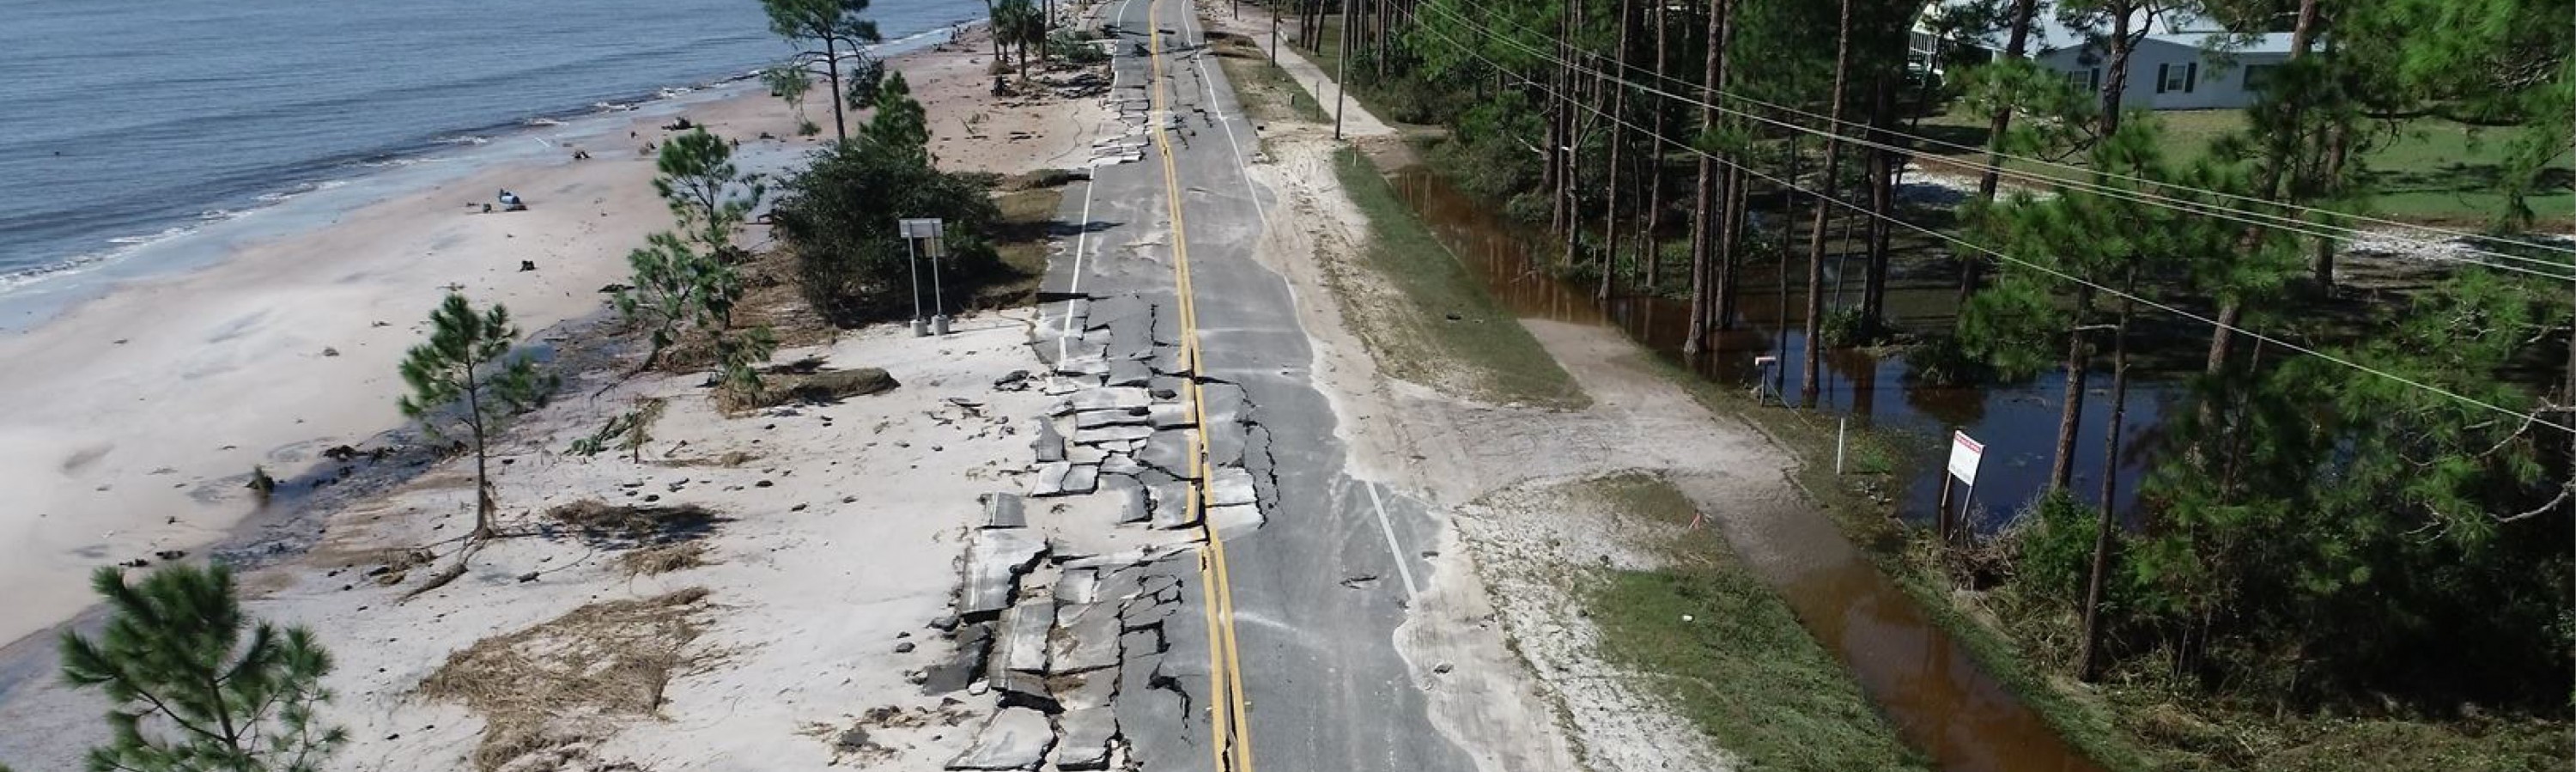 Surveying Florida's Panhandle: DRMP's Services Key to Restoration Post Hurricane Michael